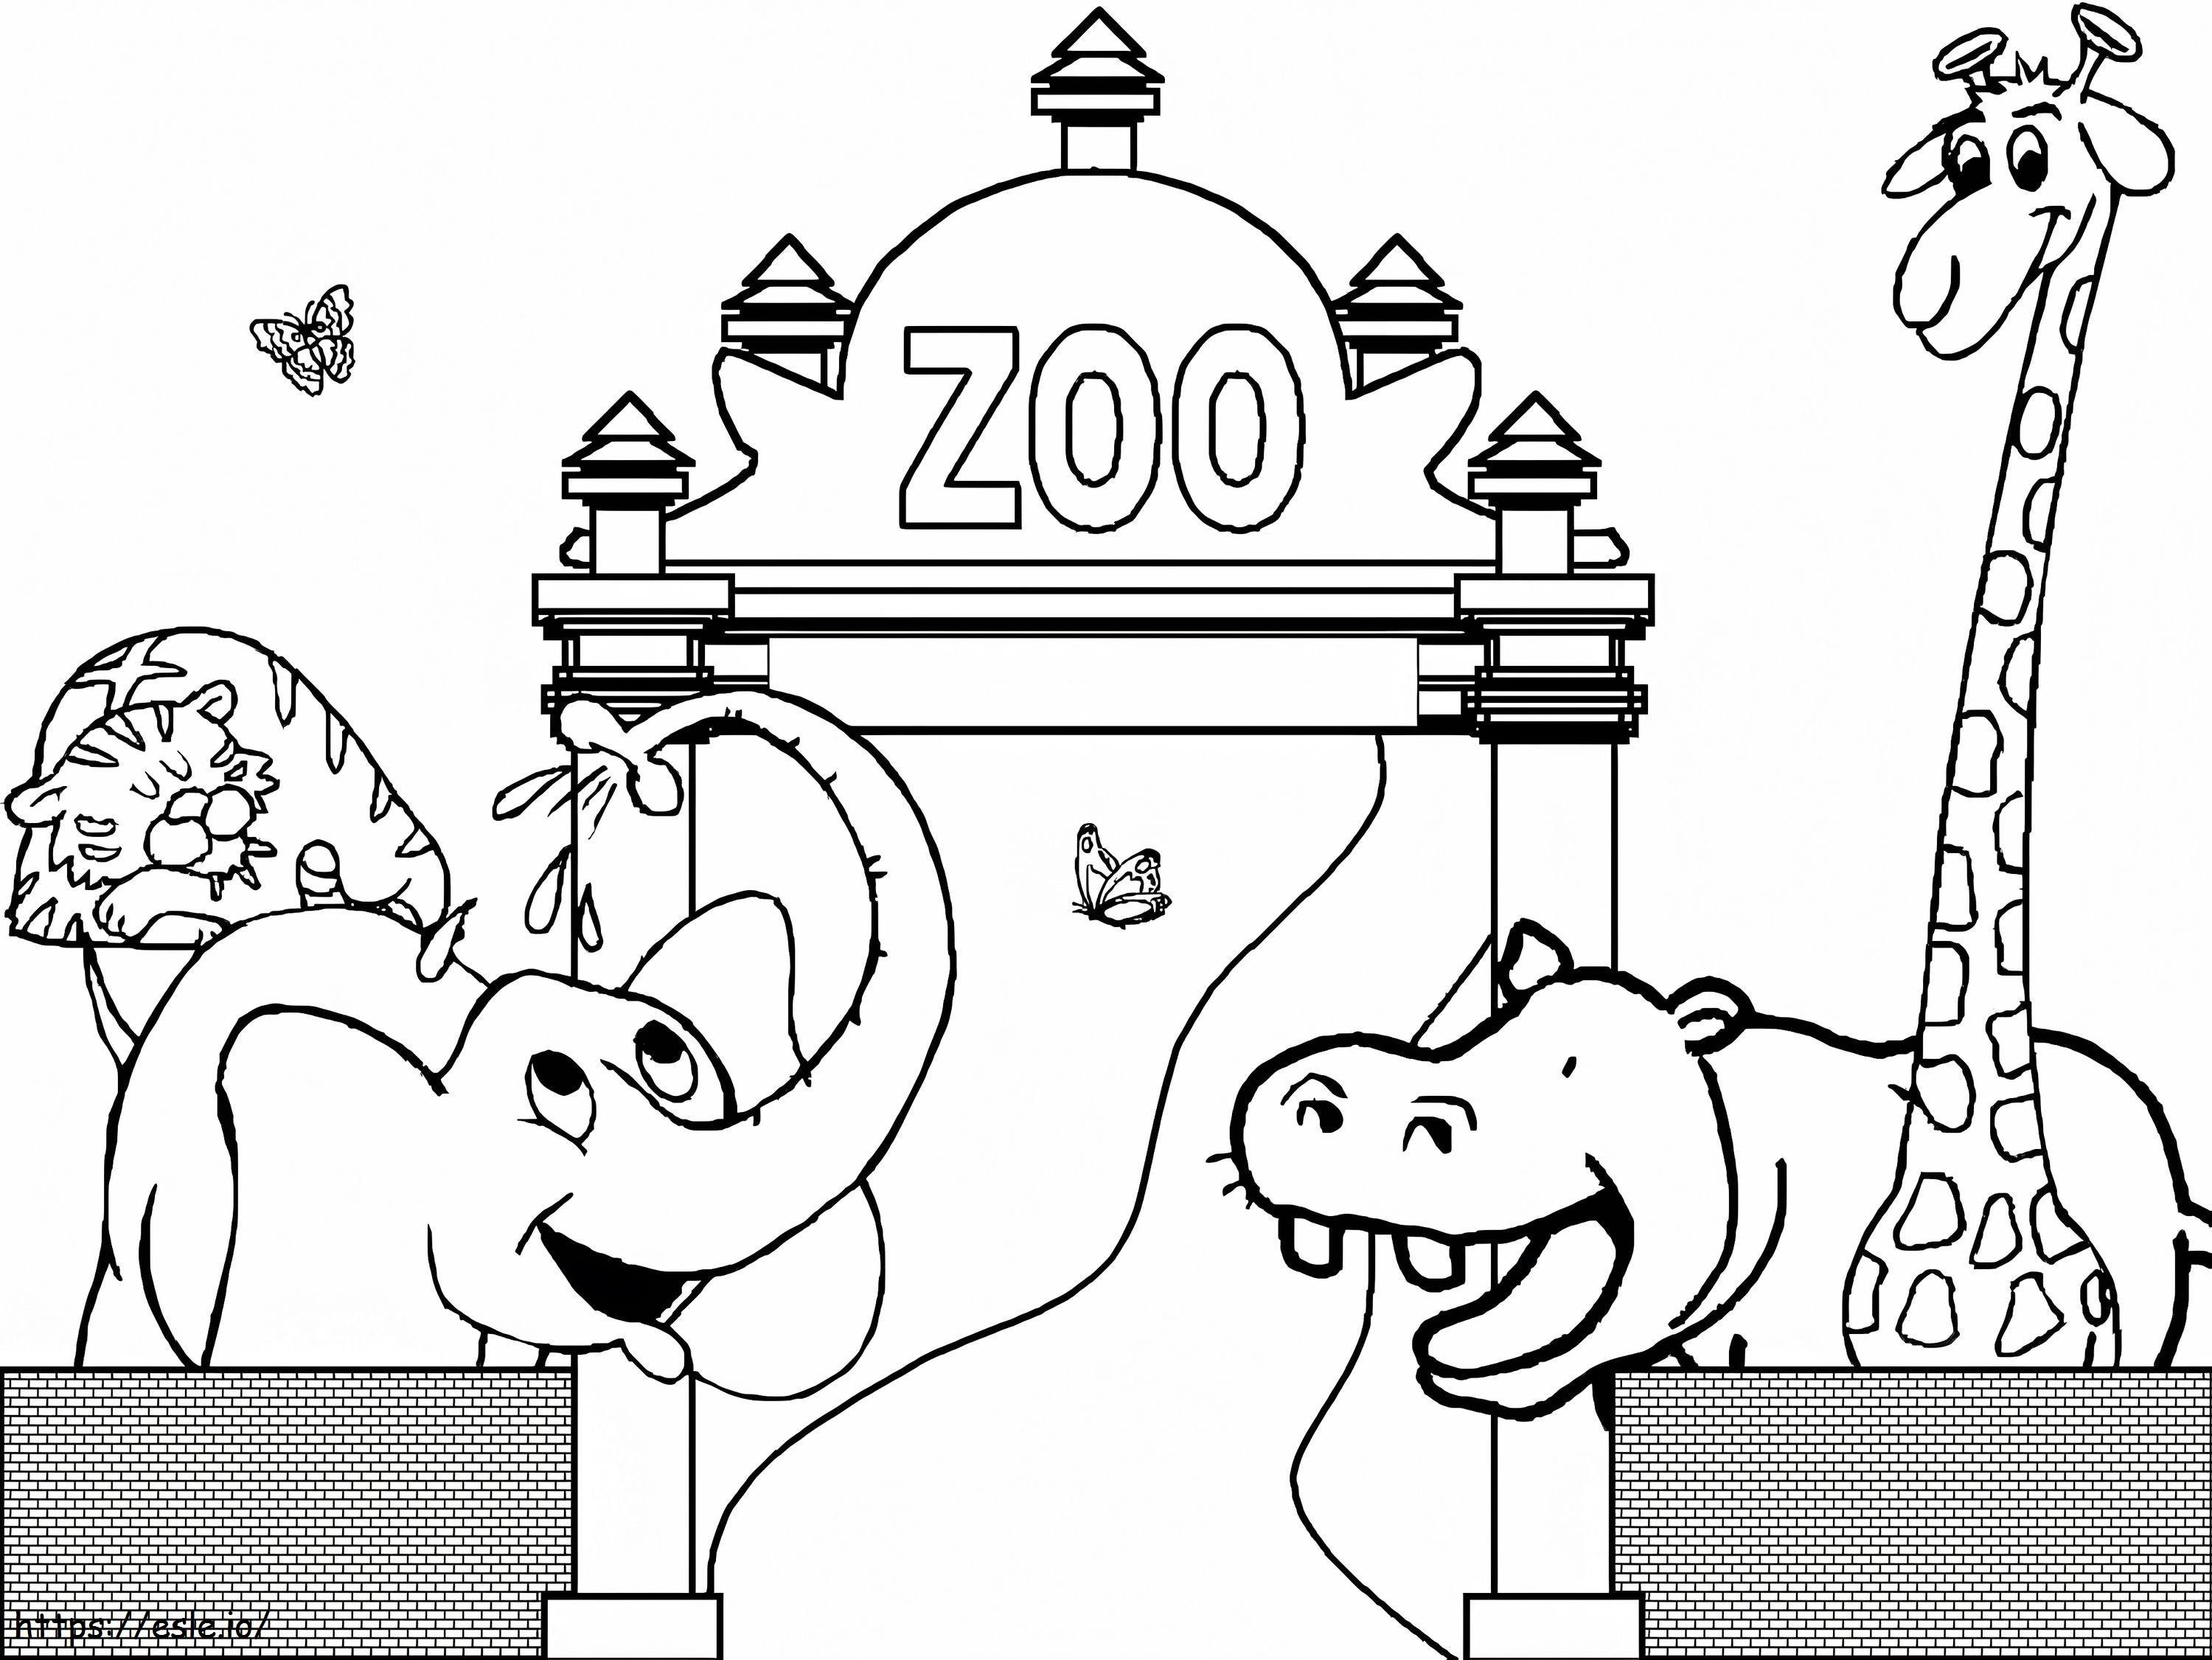 Animais felizes do zoológico para colorir